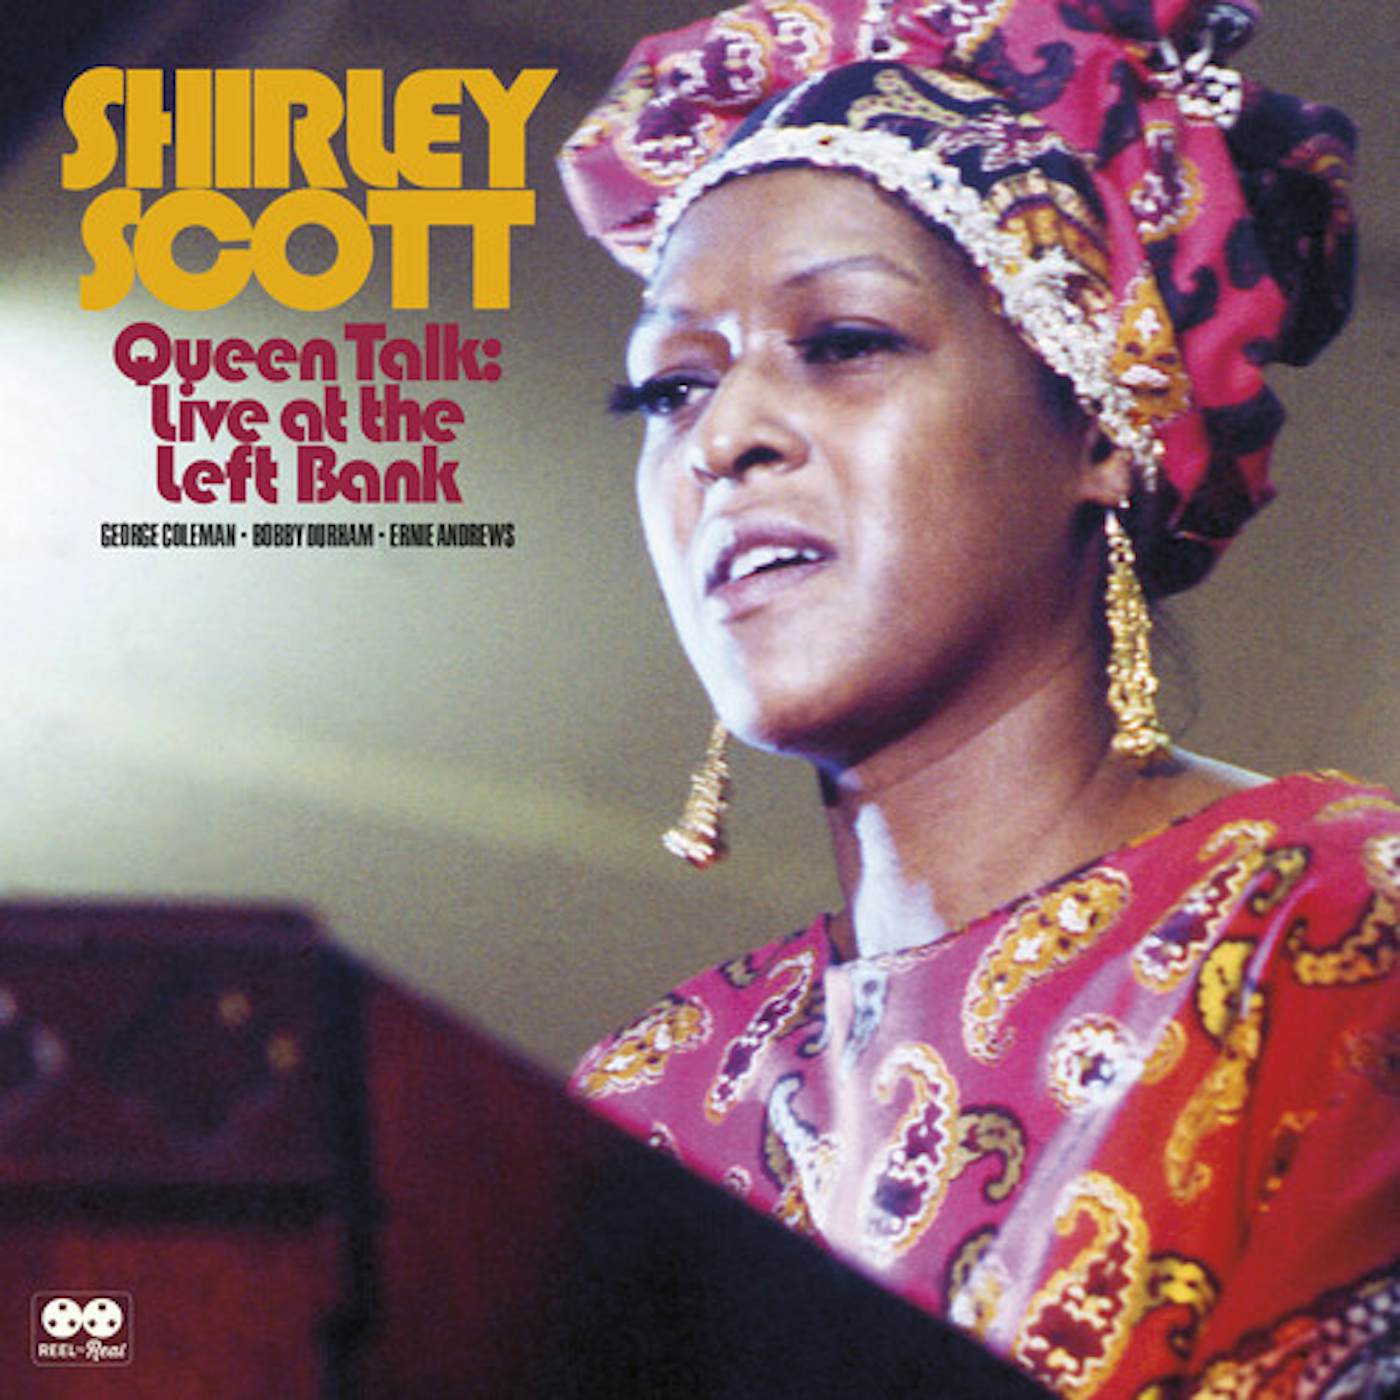 Shirley Scott Queen Talk: Live at the Left Bank Vinyl Record